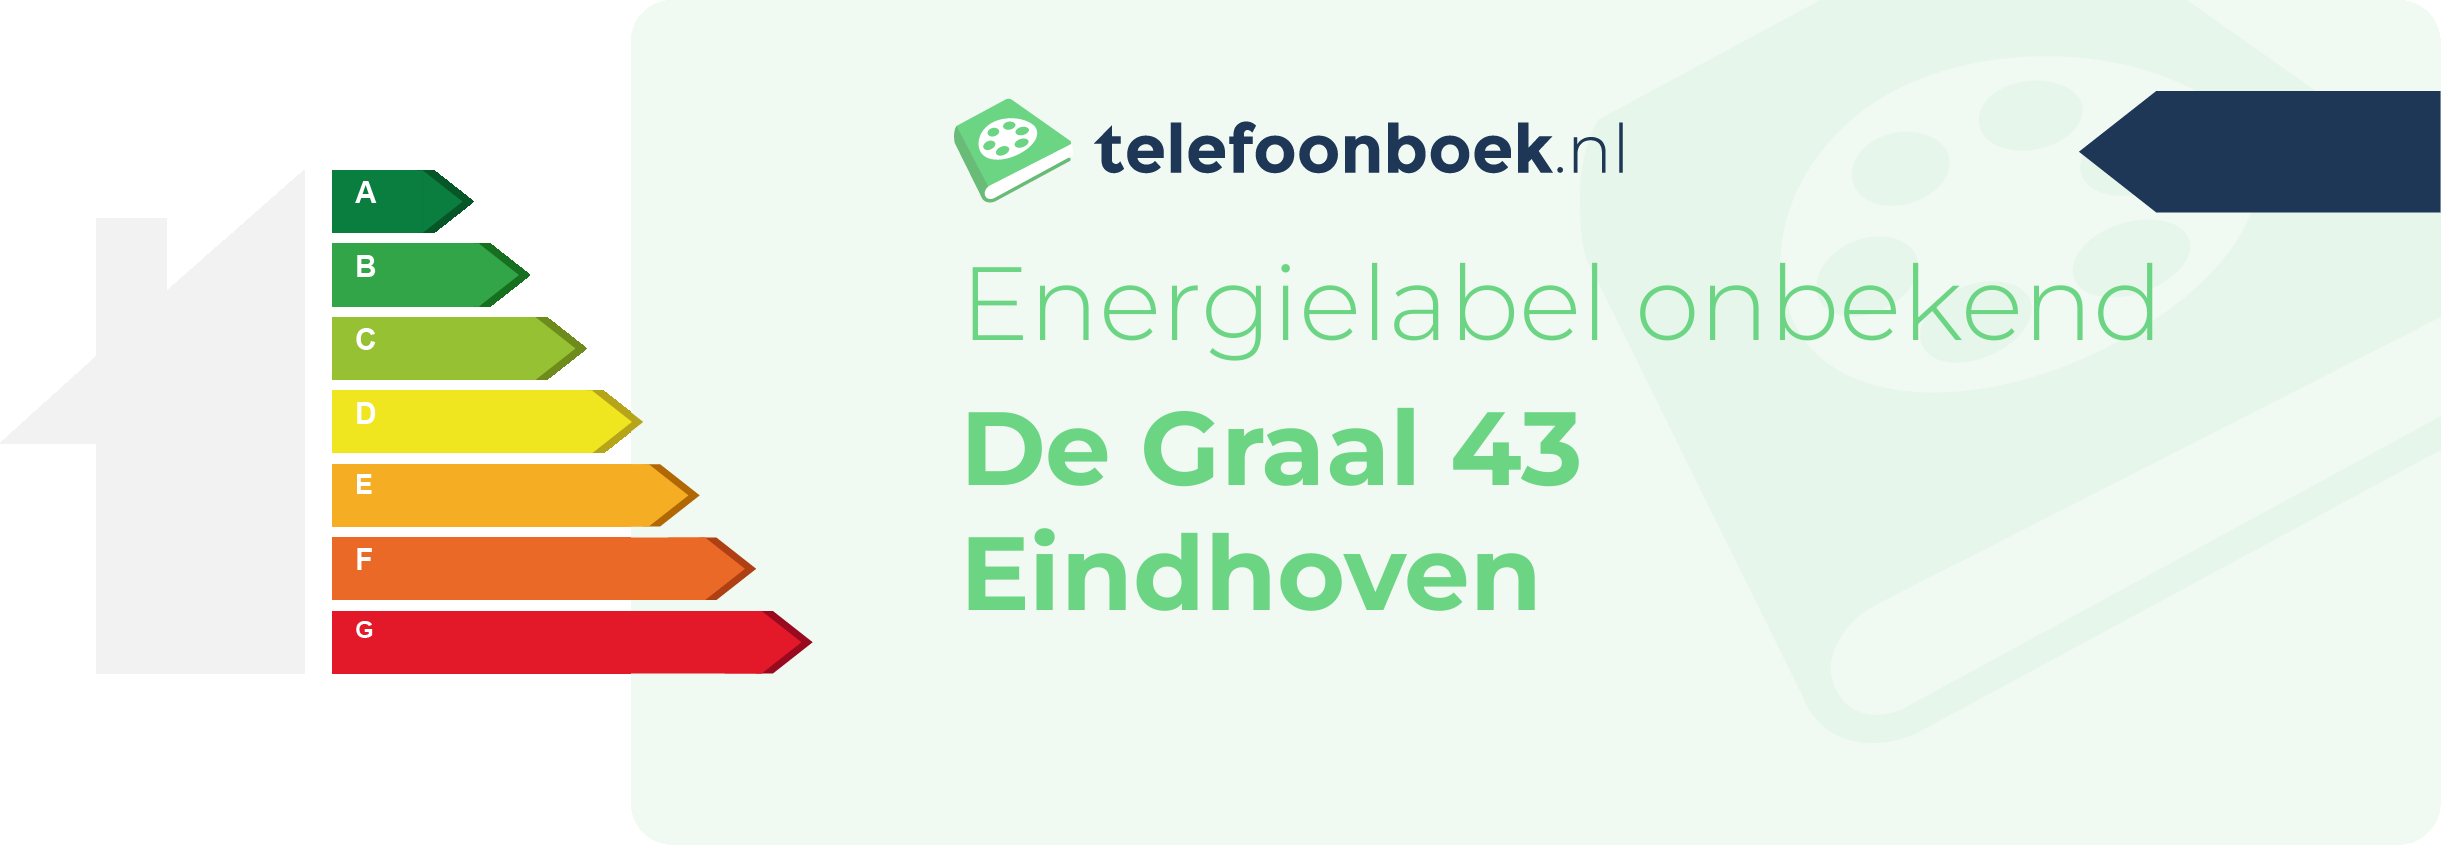 Energielabel De Graal 43 Eindhoven